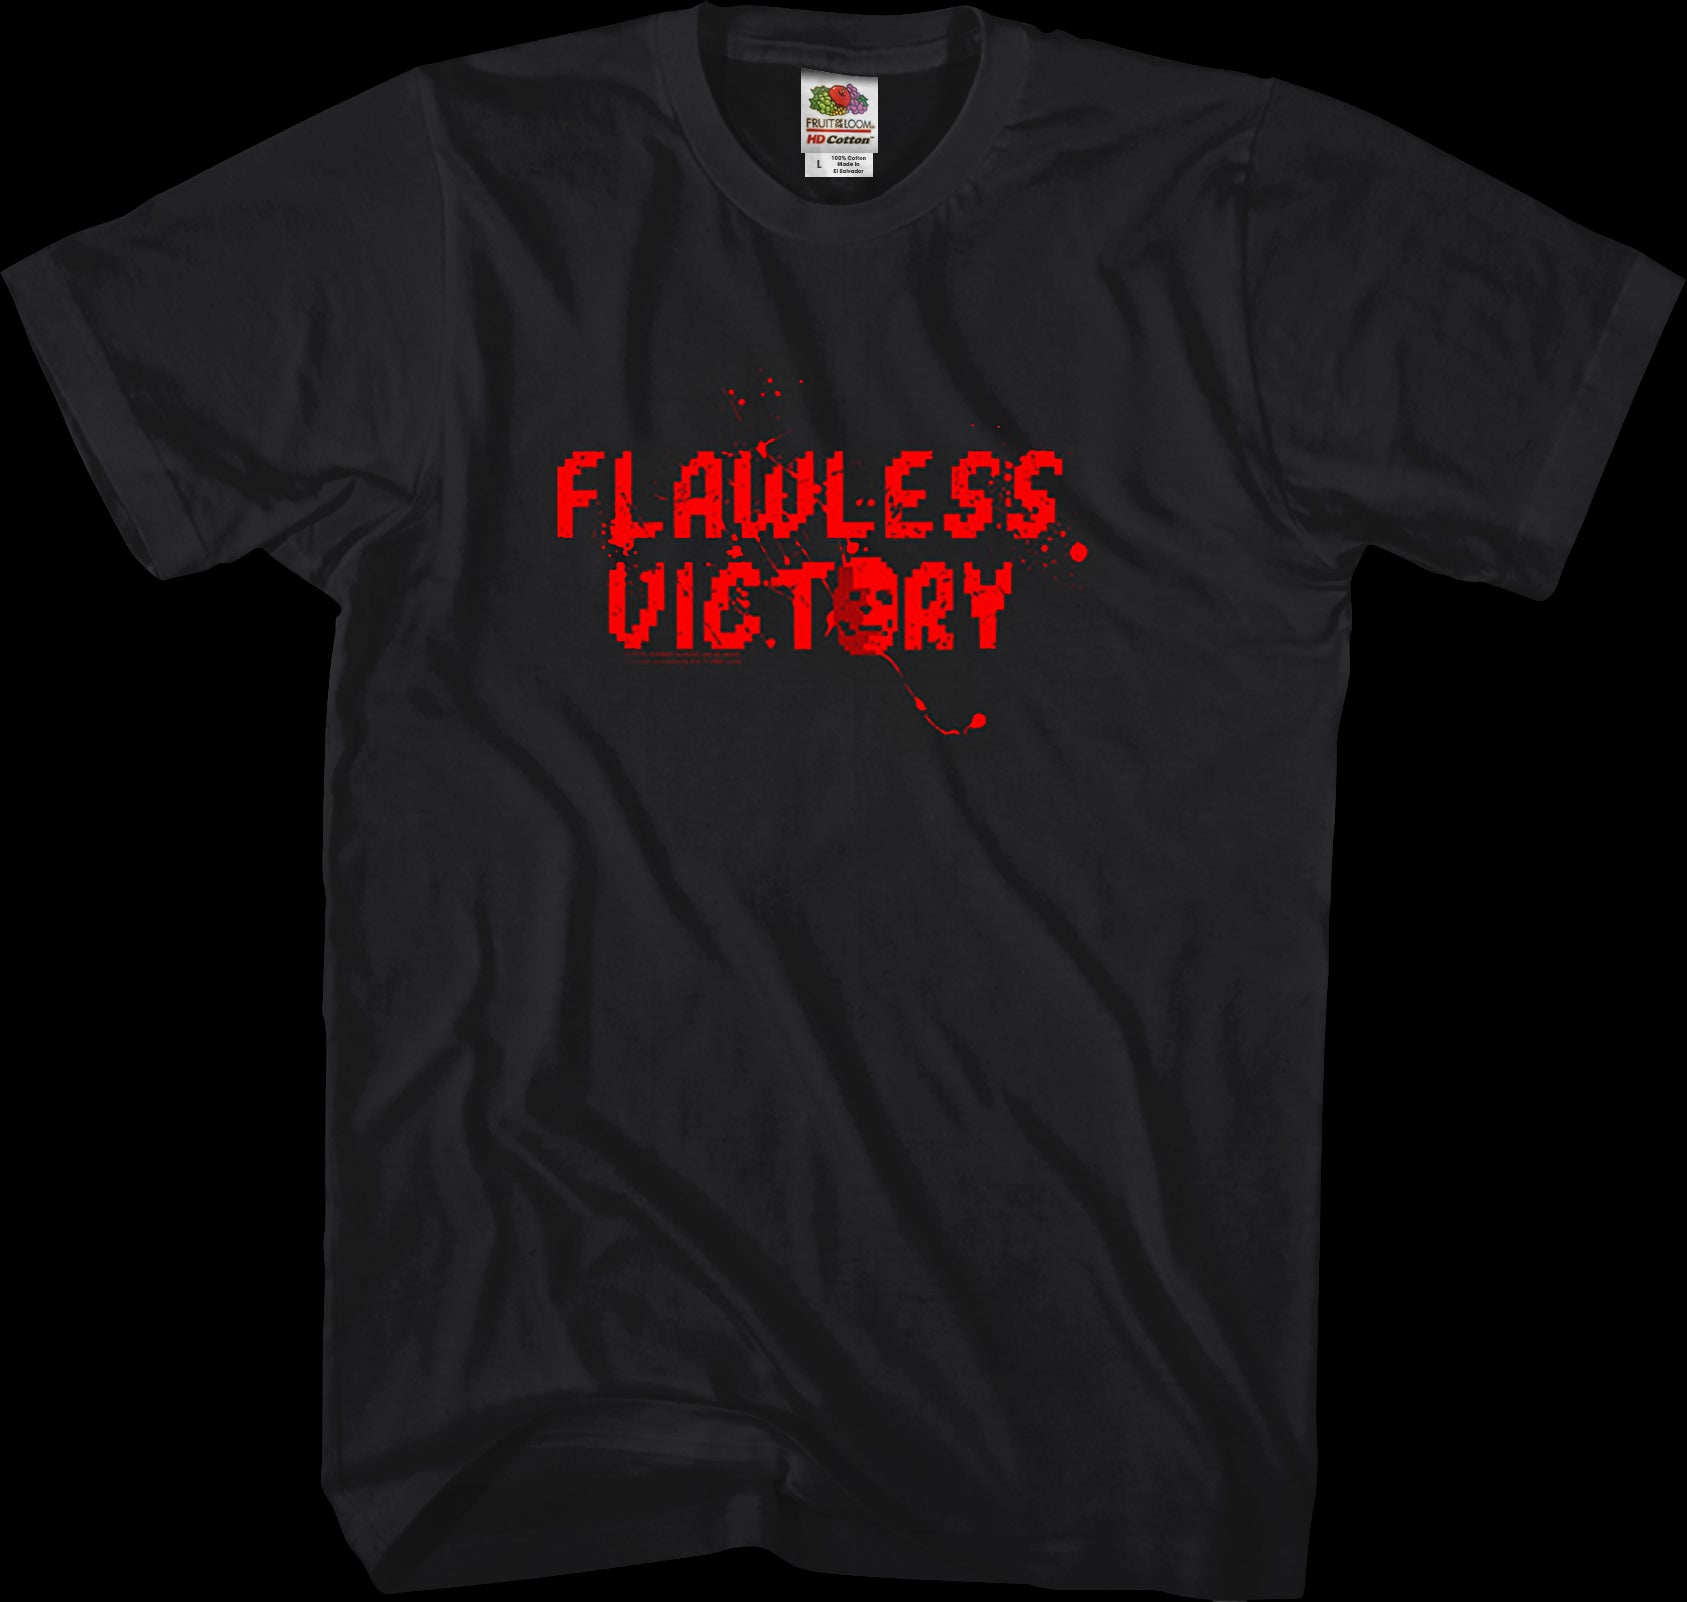 Mortal Kombat Flawless Victory T-shirt On Sale